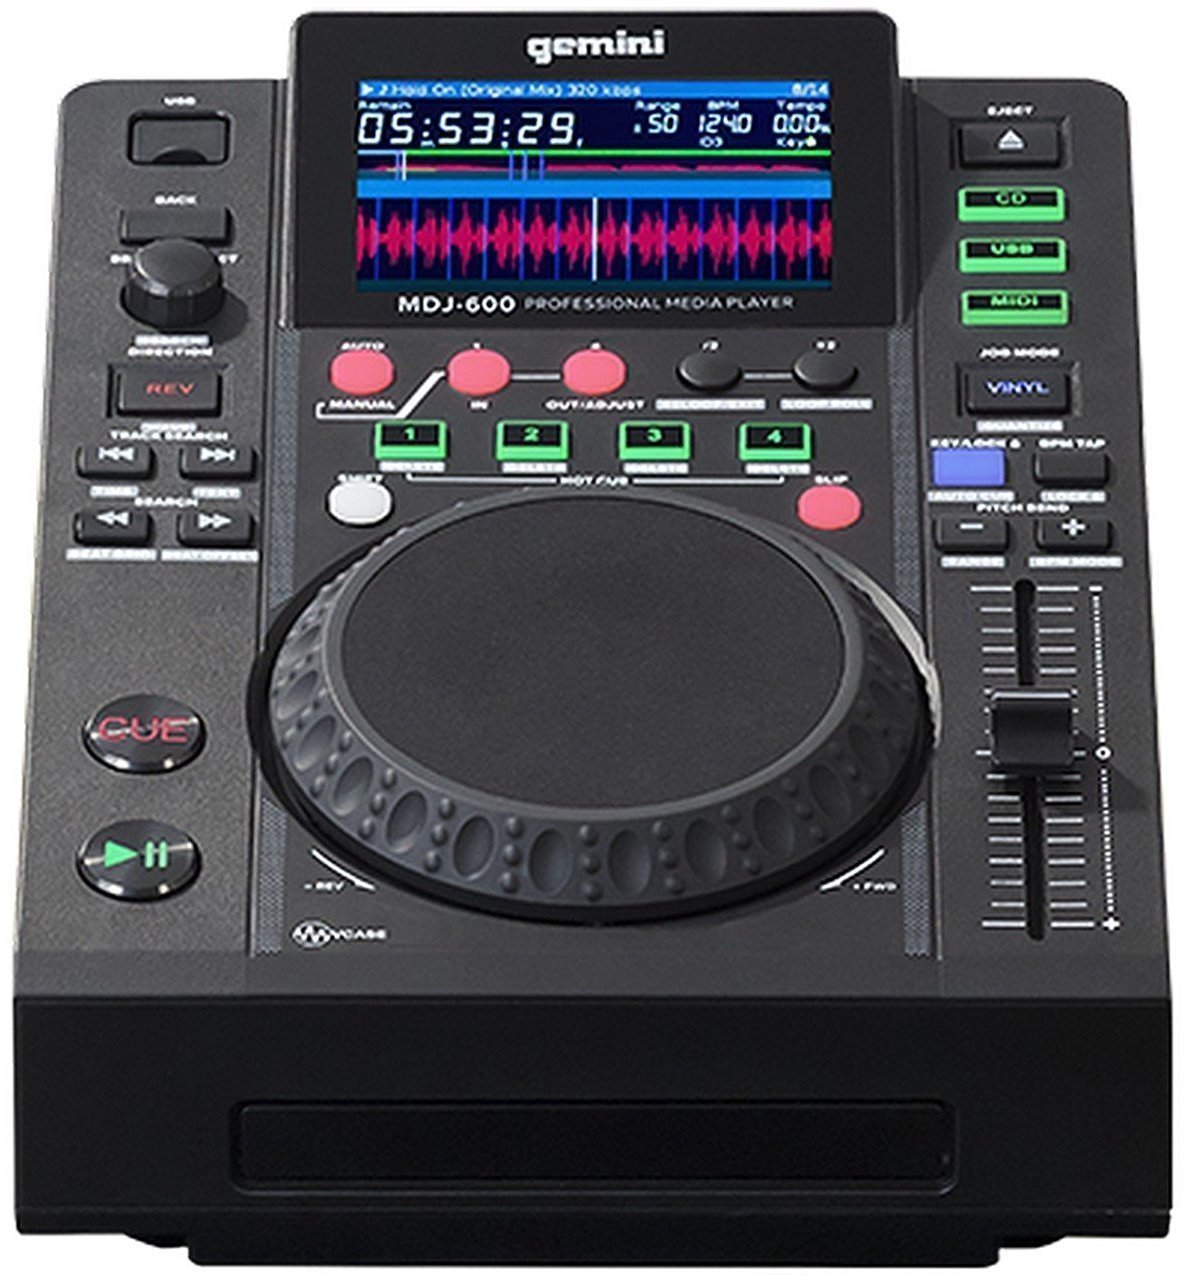 Desk DJ Player Gemini MDJ-600